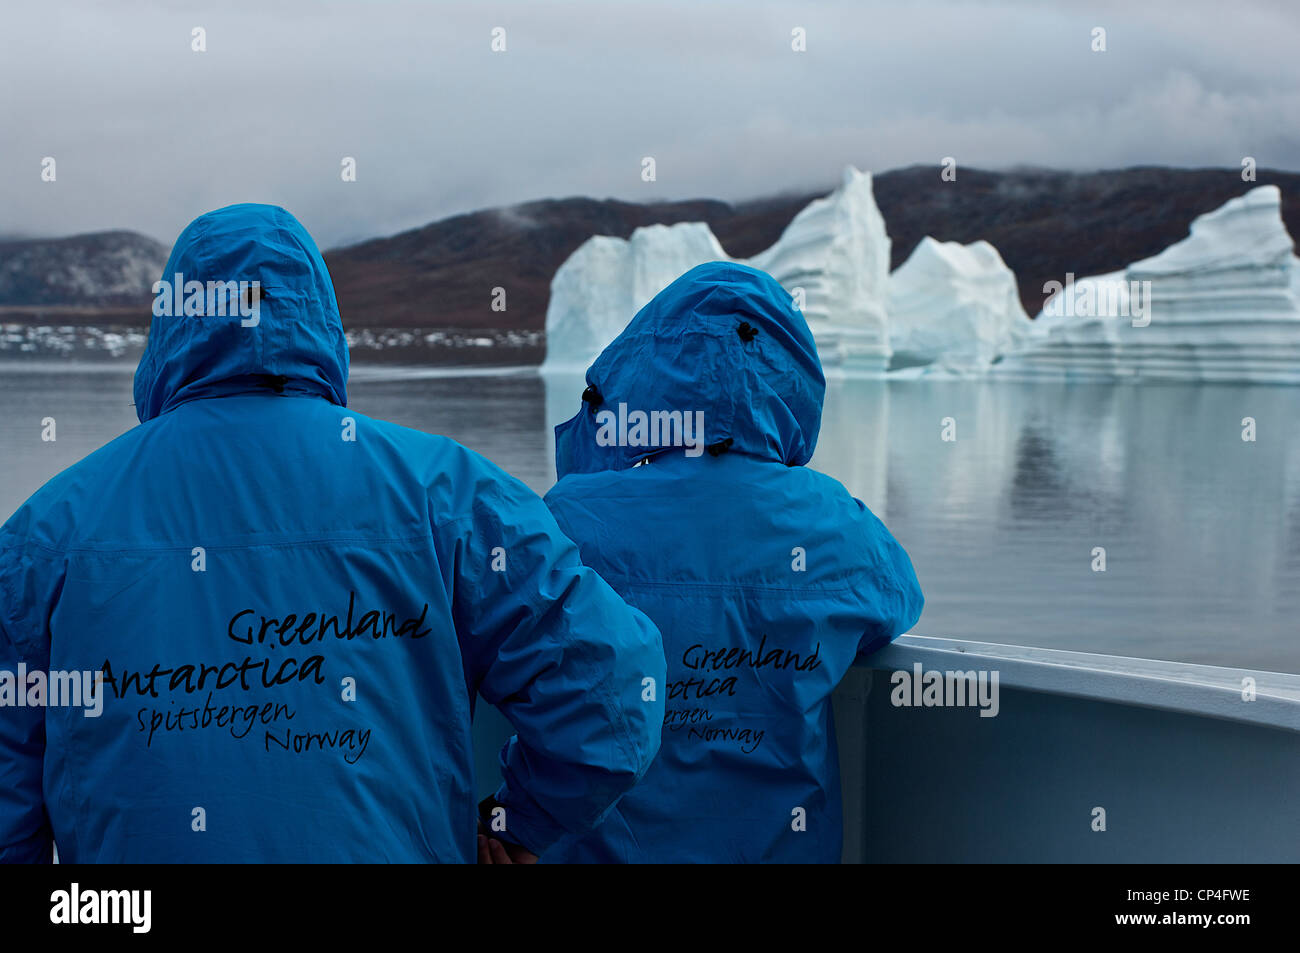 Greenland West Coast Qaasuitsup Kommunia Upernavik. Two passengers of polar cruise ship M/S Fram watching Egip Sermia Glacier. Stock Photo